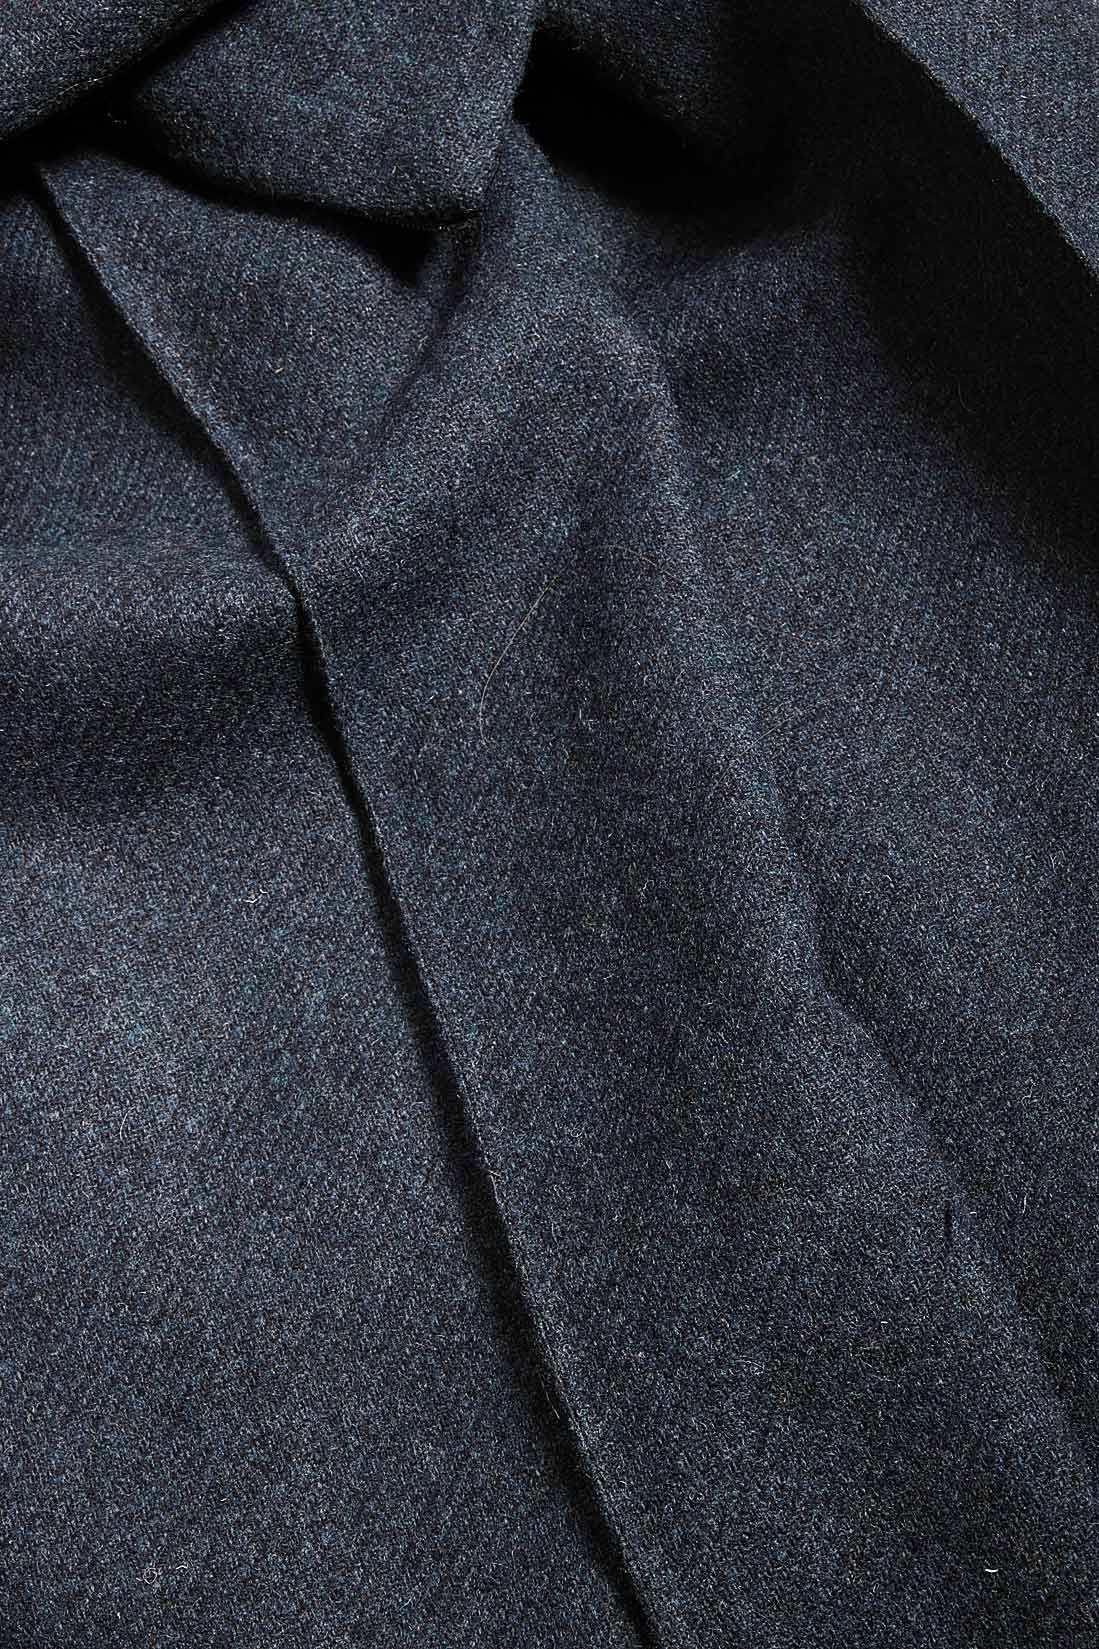 Pantaloni culot din lana naturala ATU Body Couture imagine 3